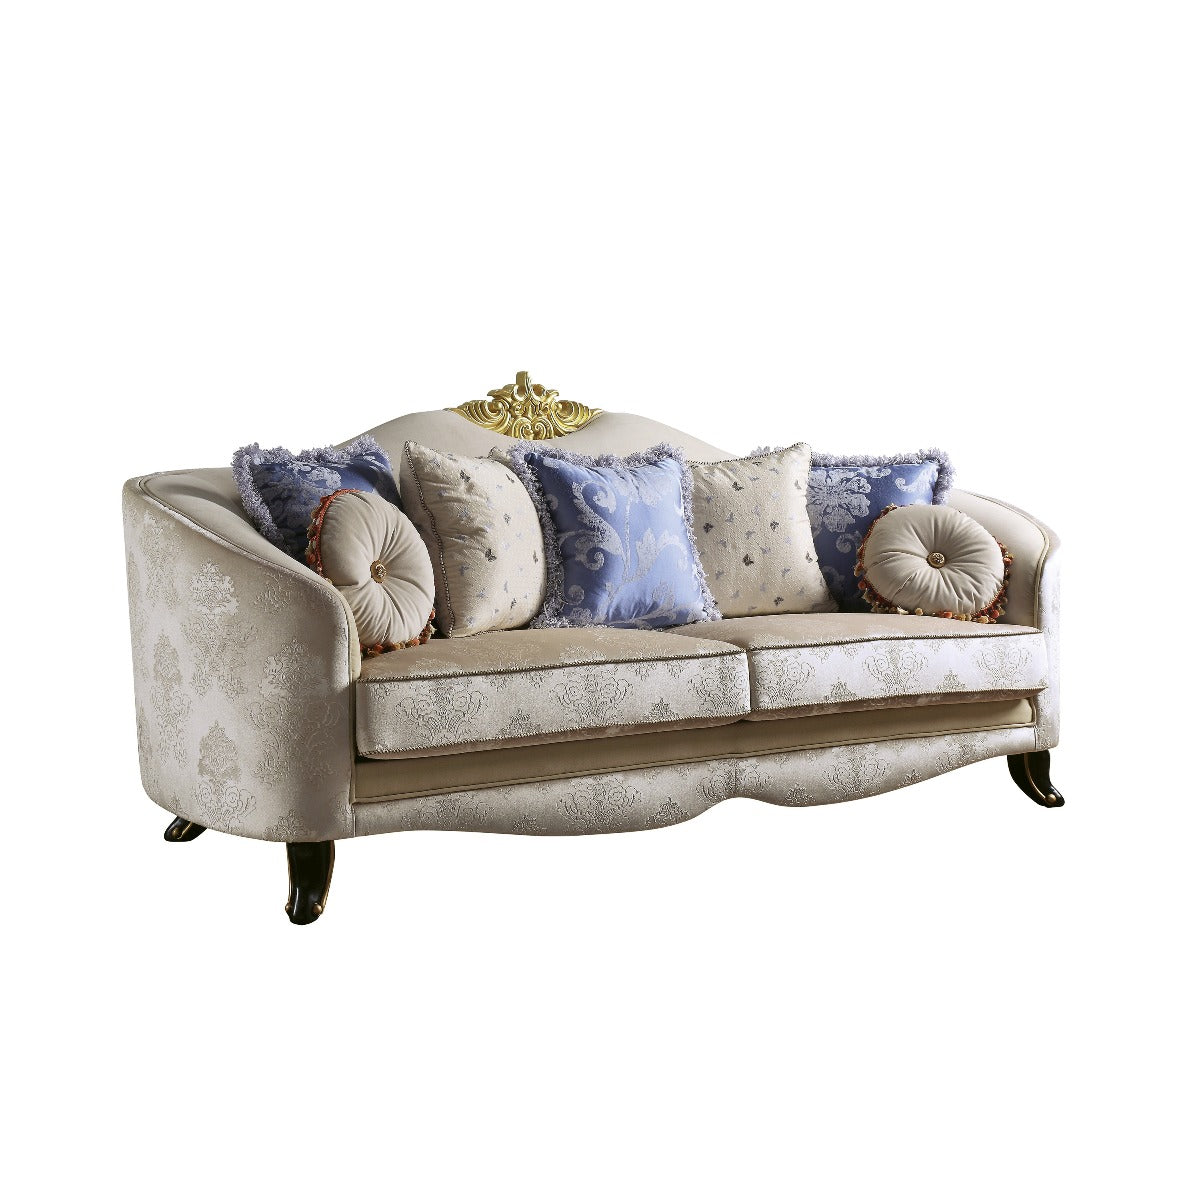 ACME Furniture Sofas & Couches - Sheridan Sofa w/7 Pillows, Cream Fabric (53945)